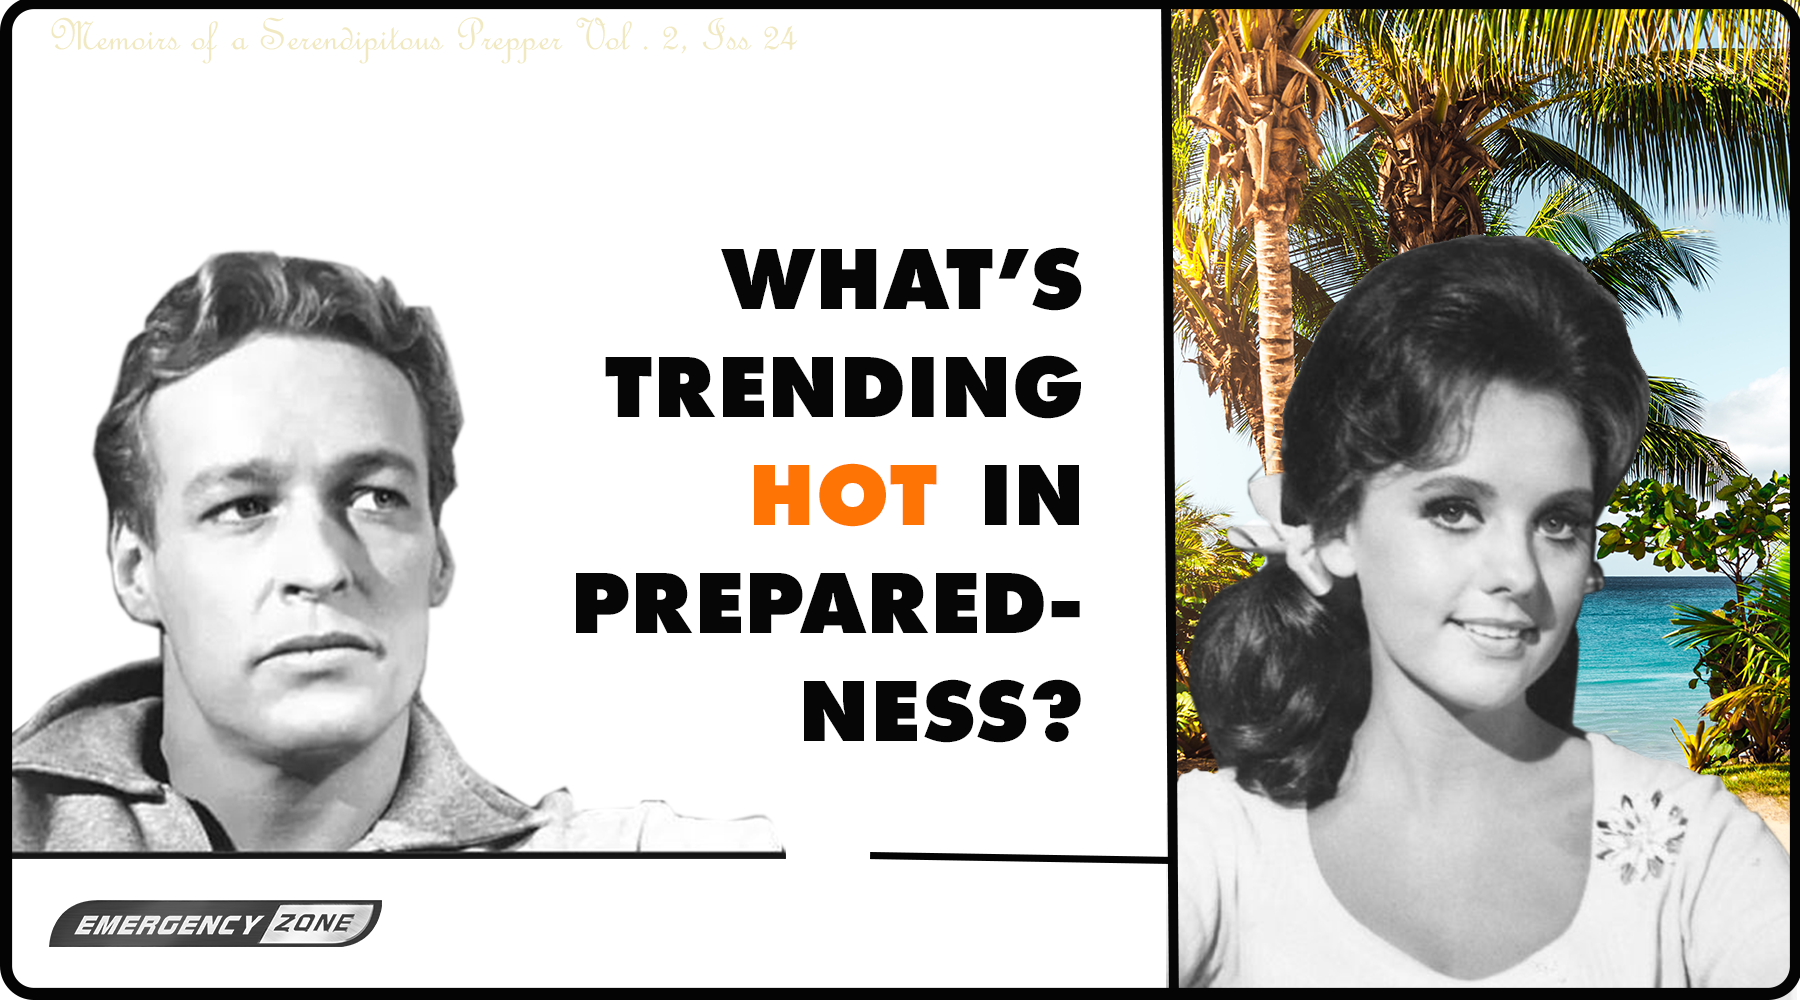 What's Trending HOT in Preparedness?